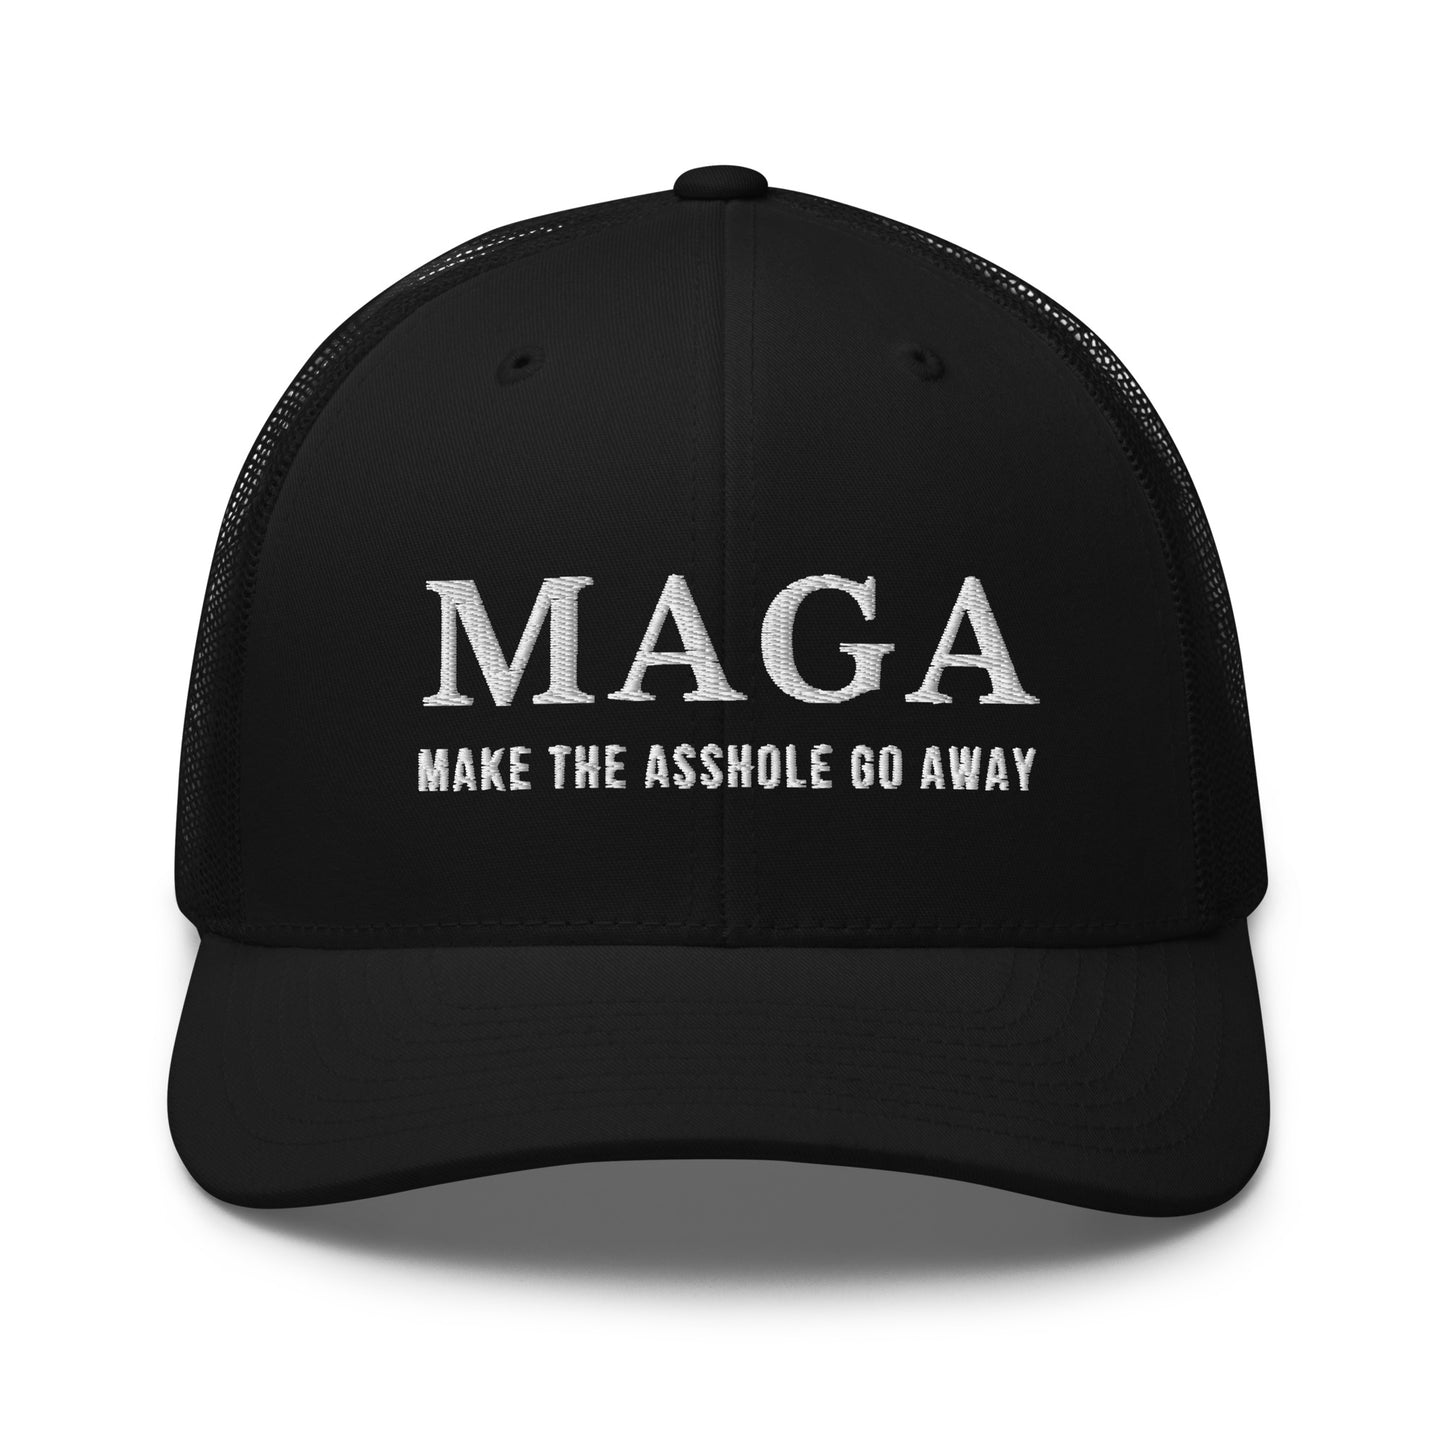 MAGA Make The Asshole Go Away Trucker Cap, Anti Trump Embroidered Ha